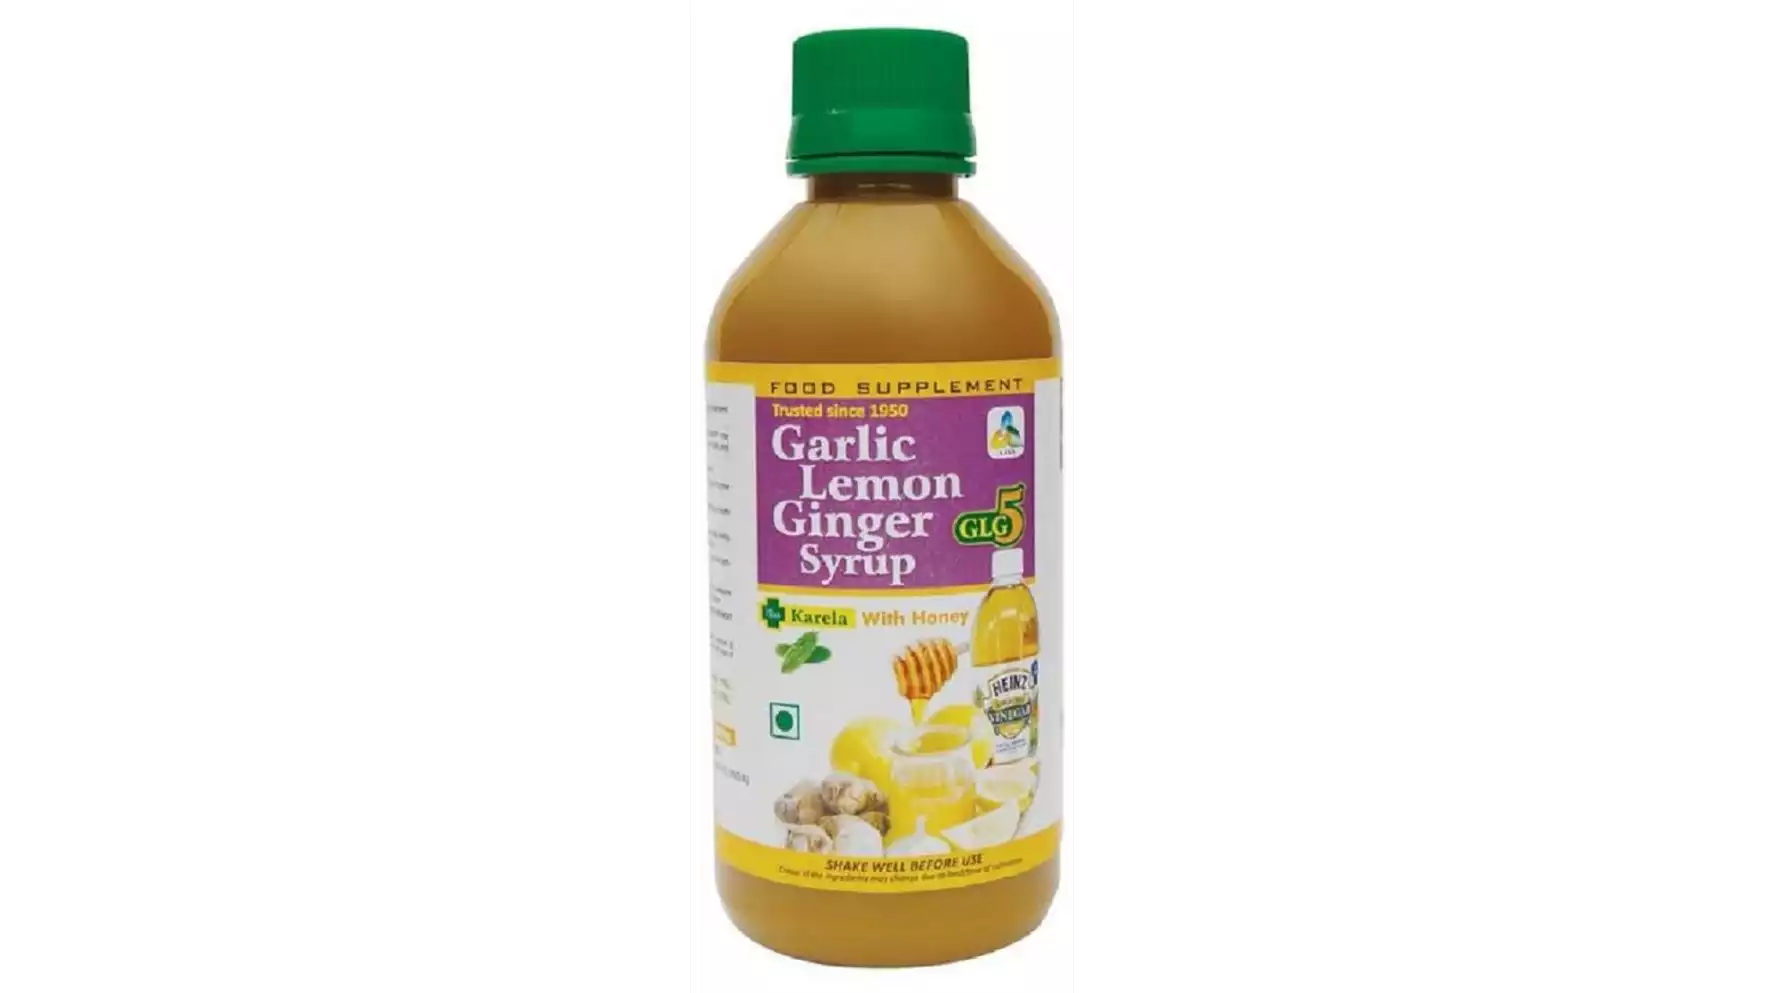 SKSB Garlic Lemon Ginger Syrup Karela with Honey (225ml)